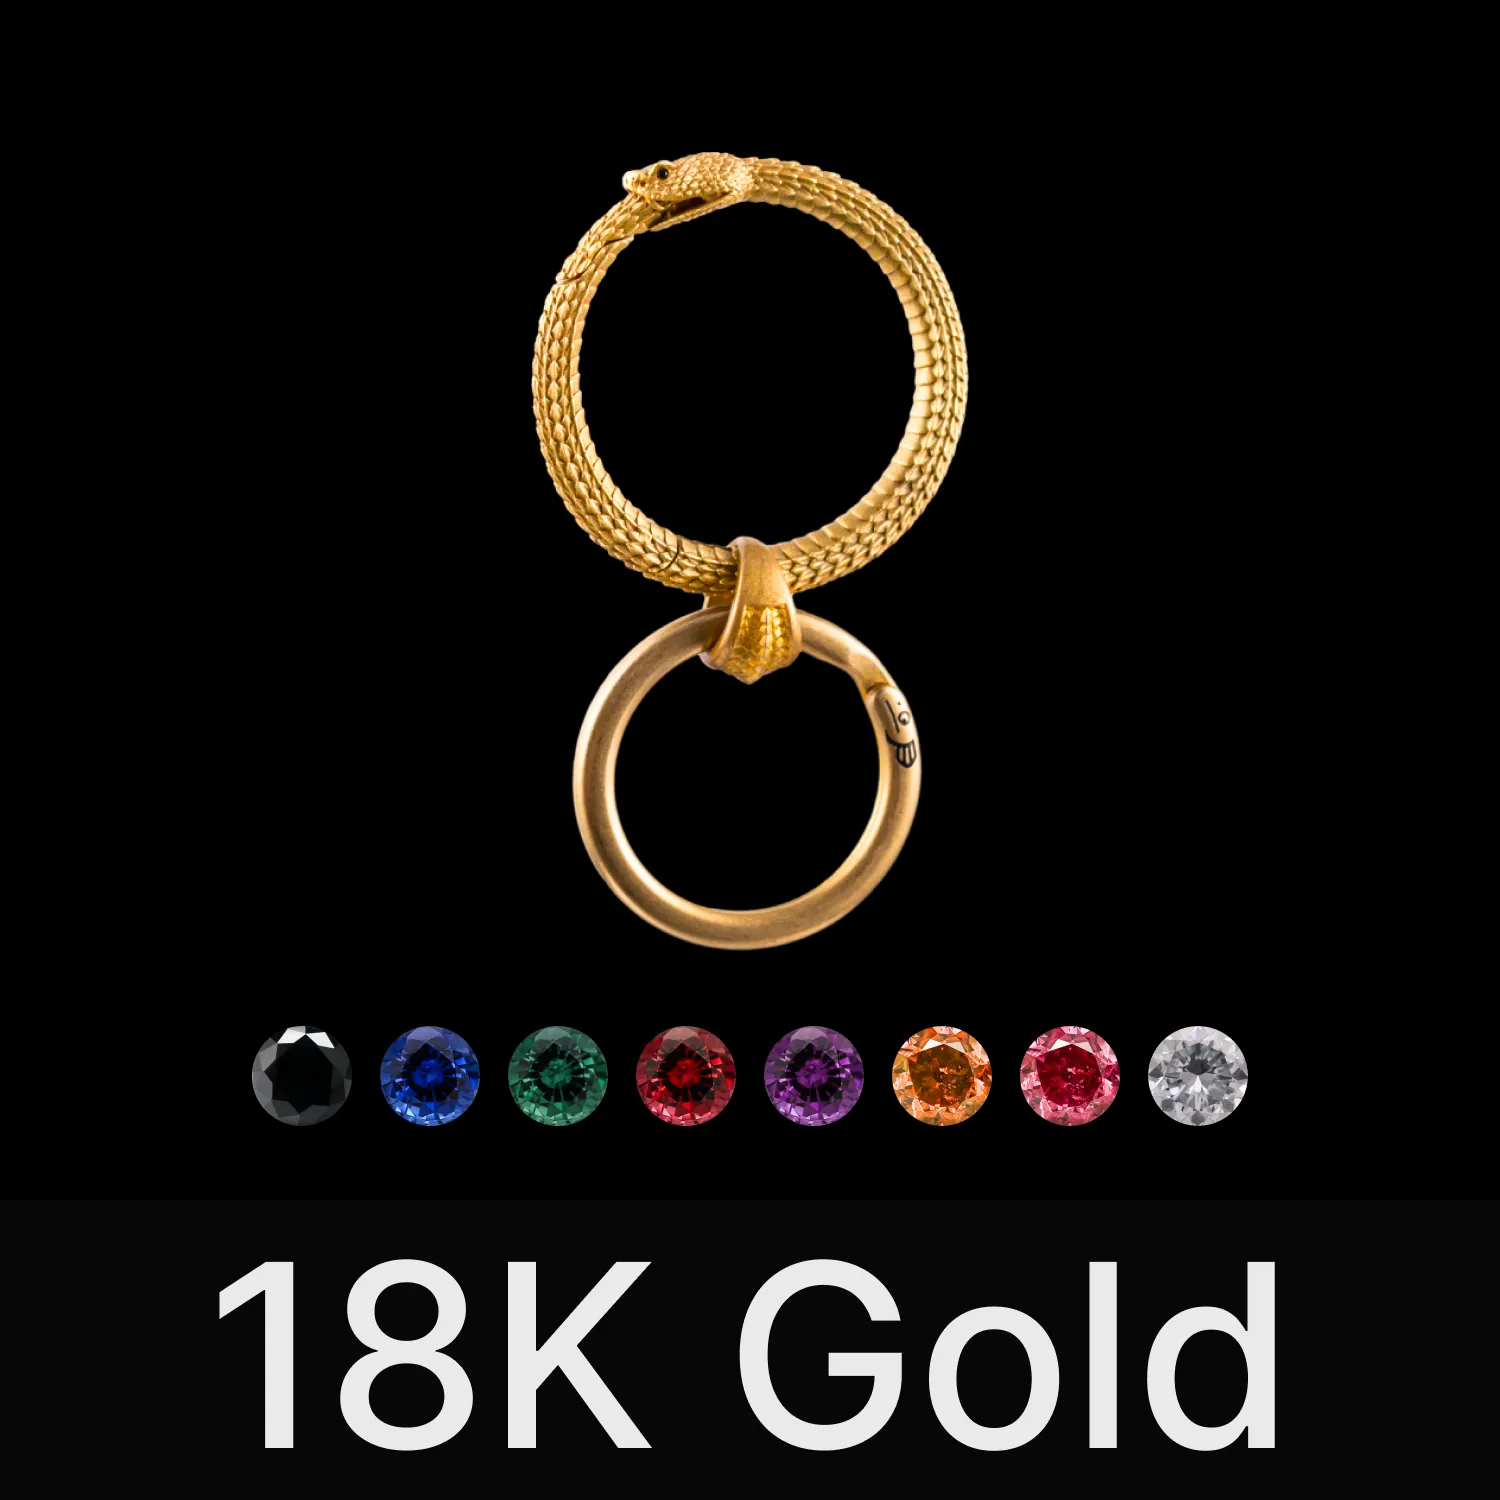 Ouroboros Keychain 18K Gold & Gemstone